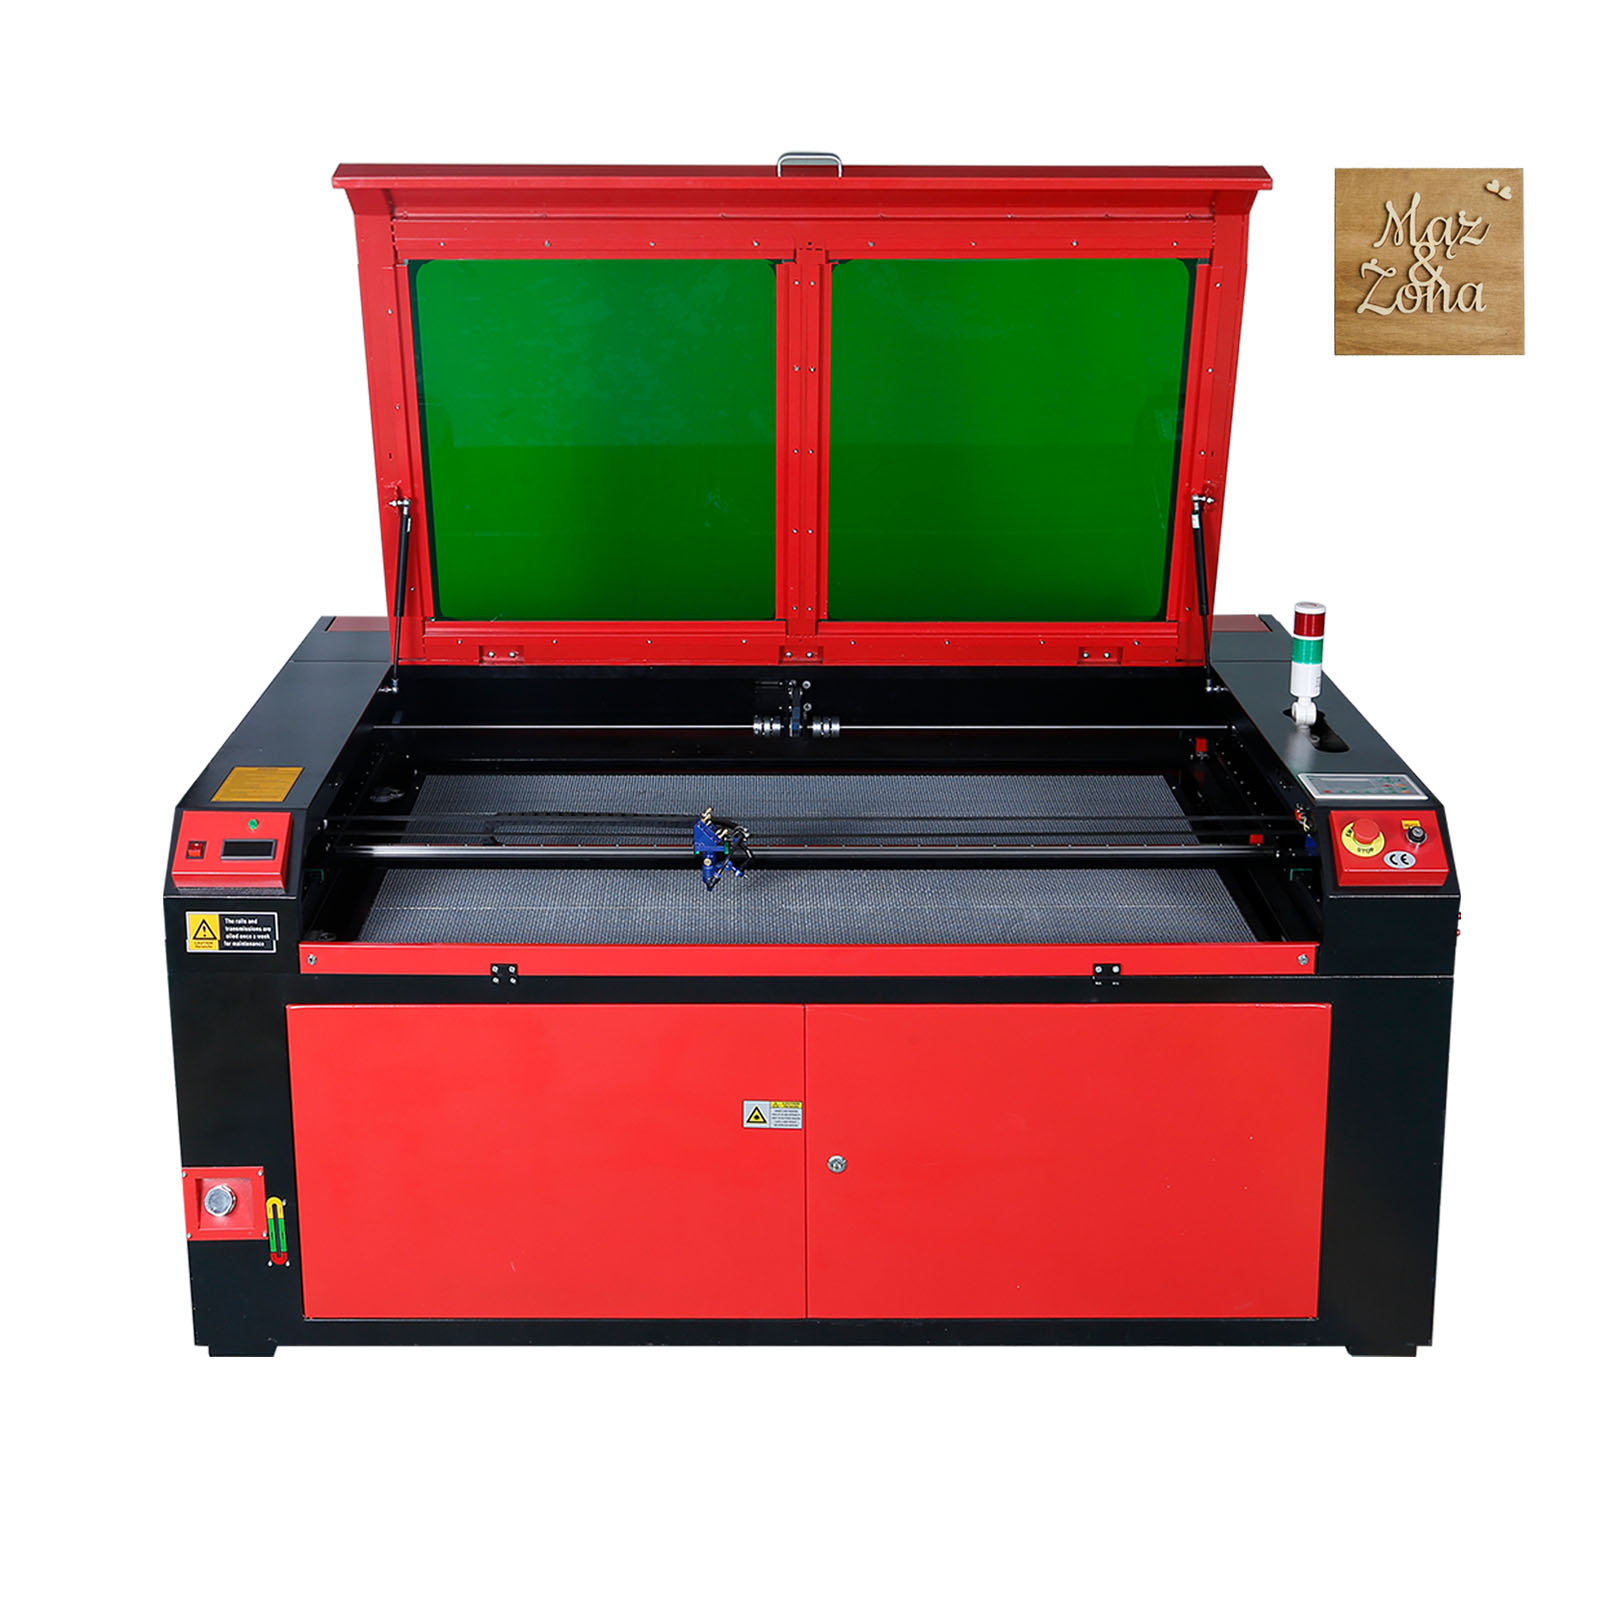 CO2 laser engraver,100W,600 x 900 mm